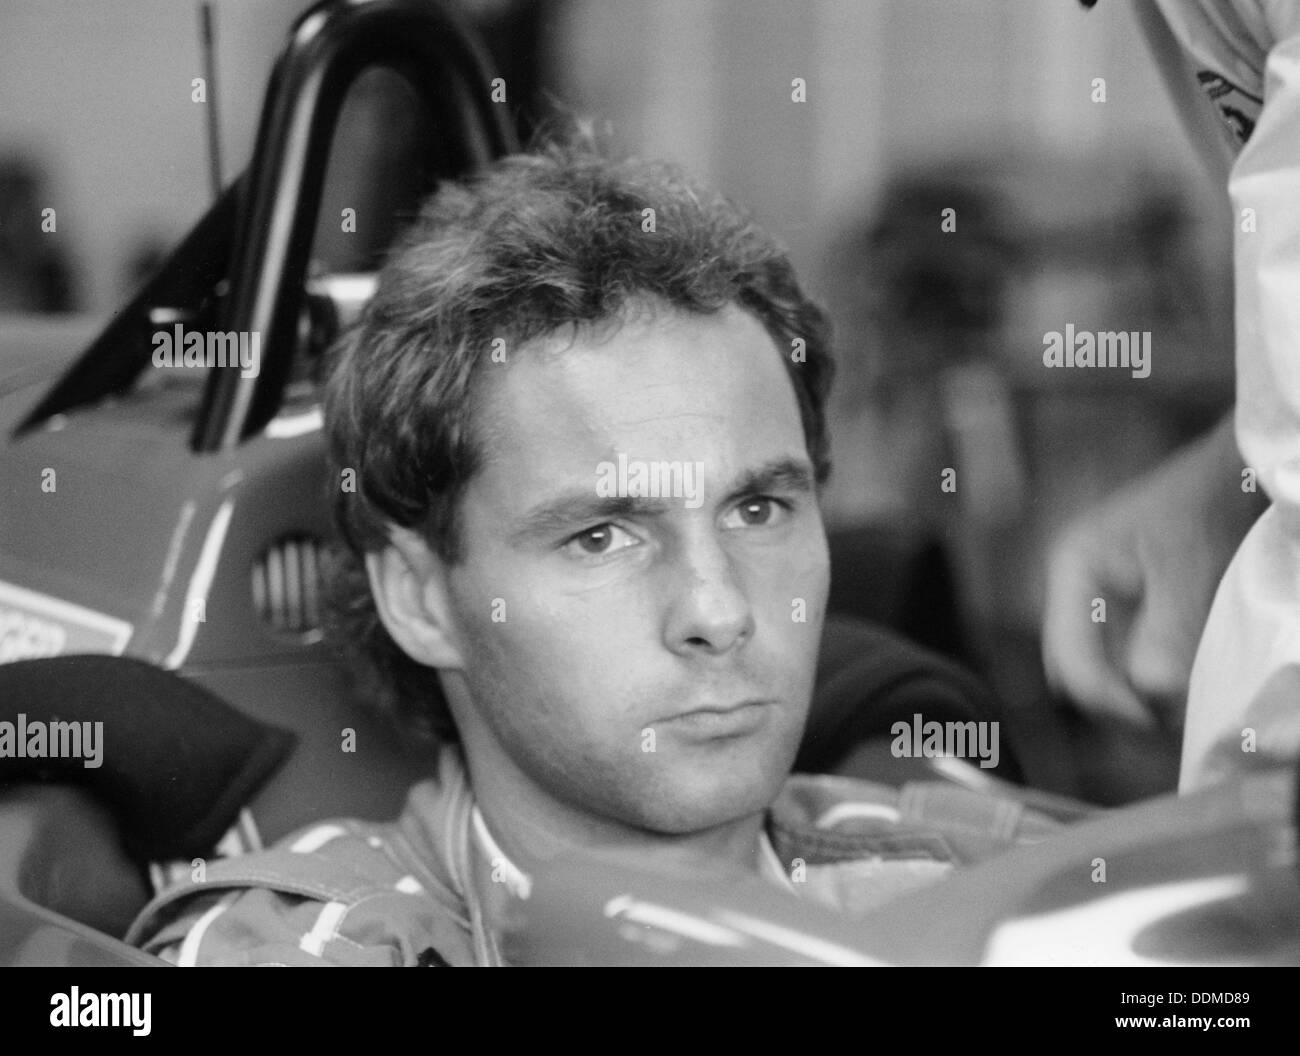 Gehard Berger with Ferrari, 1988. Artist: Unknown Stock Photo